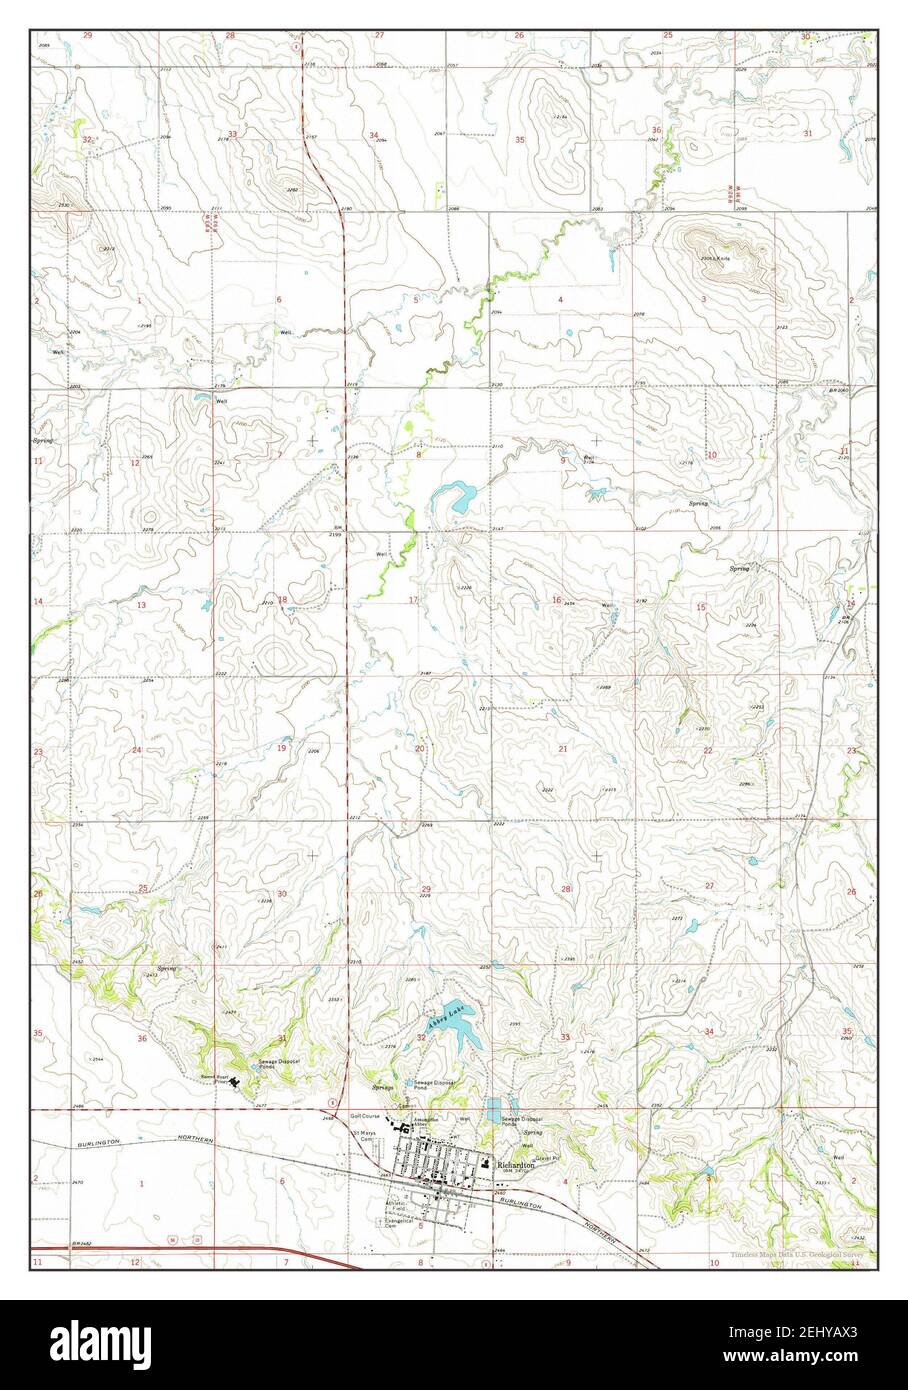 Richardton, North Dakota, map 1973, 1:24000, United States of America by Timeless Maps, data U.S. Geological Survey Stock Photo